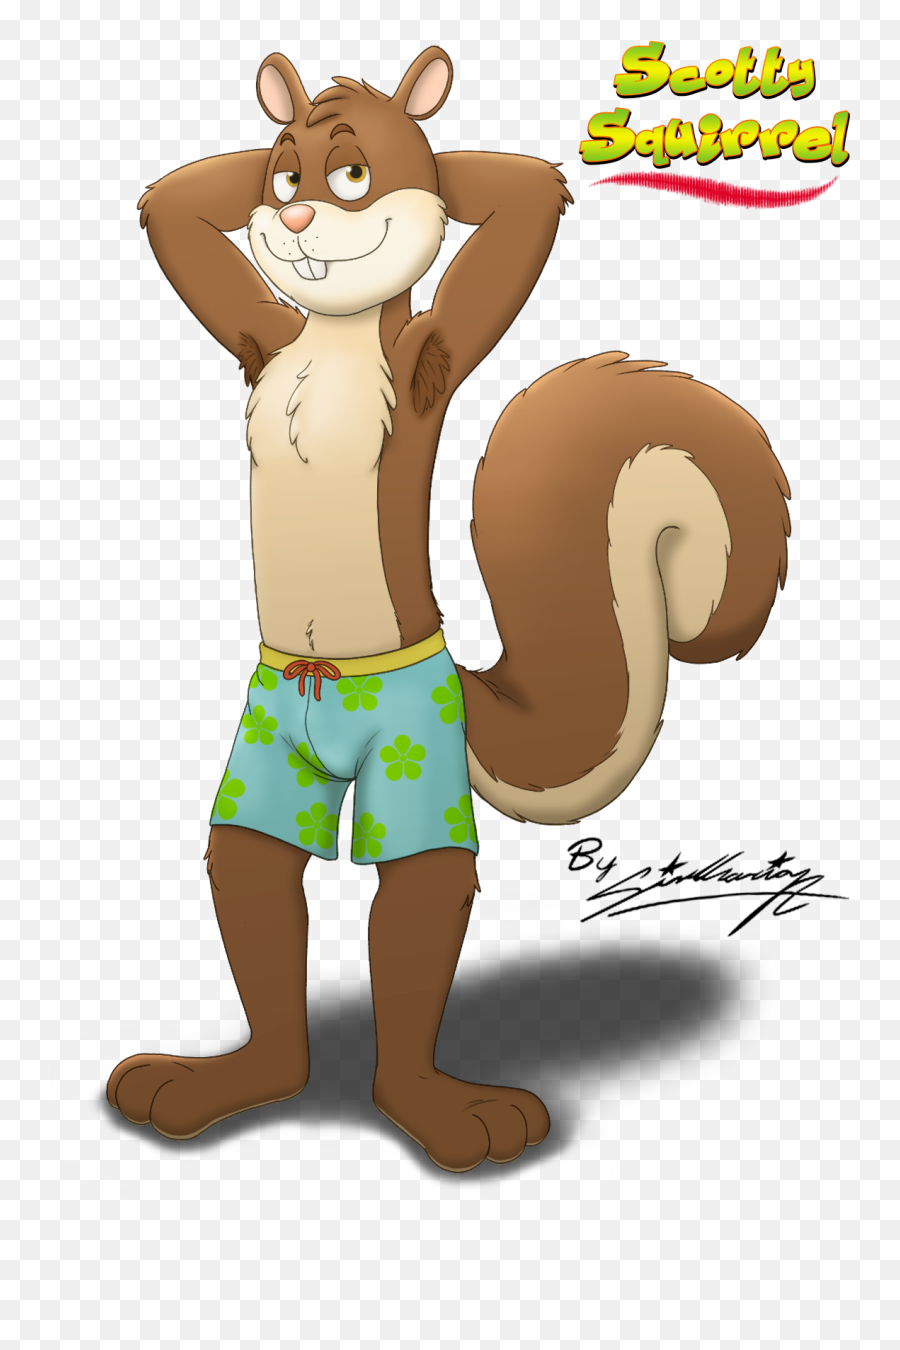 Desirable Scotty - Scotty Squirrel Relaxing Emoji,Squirrel Emoji